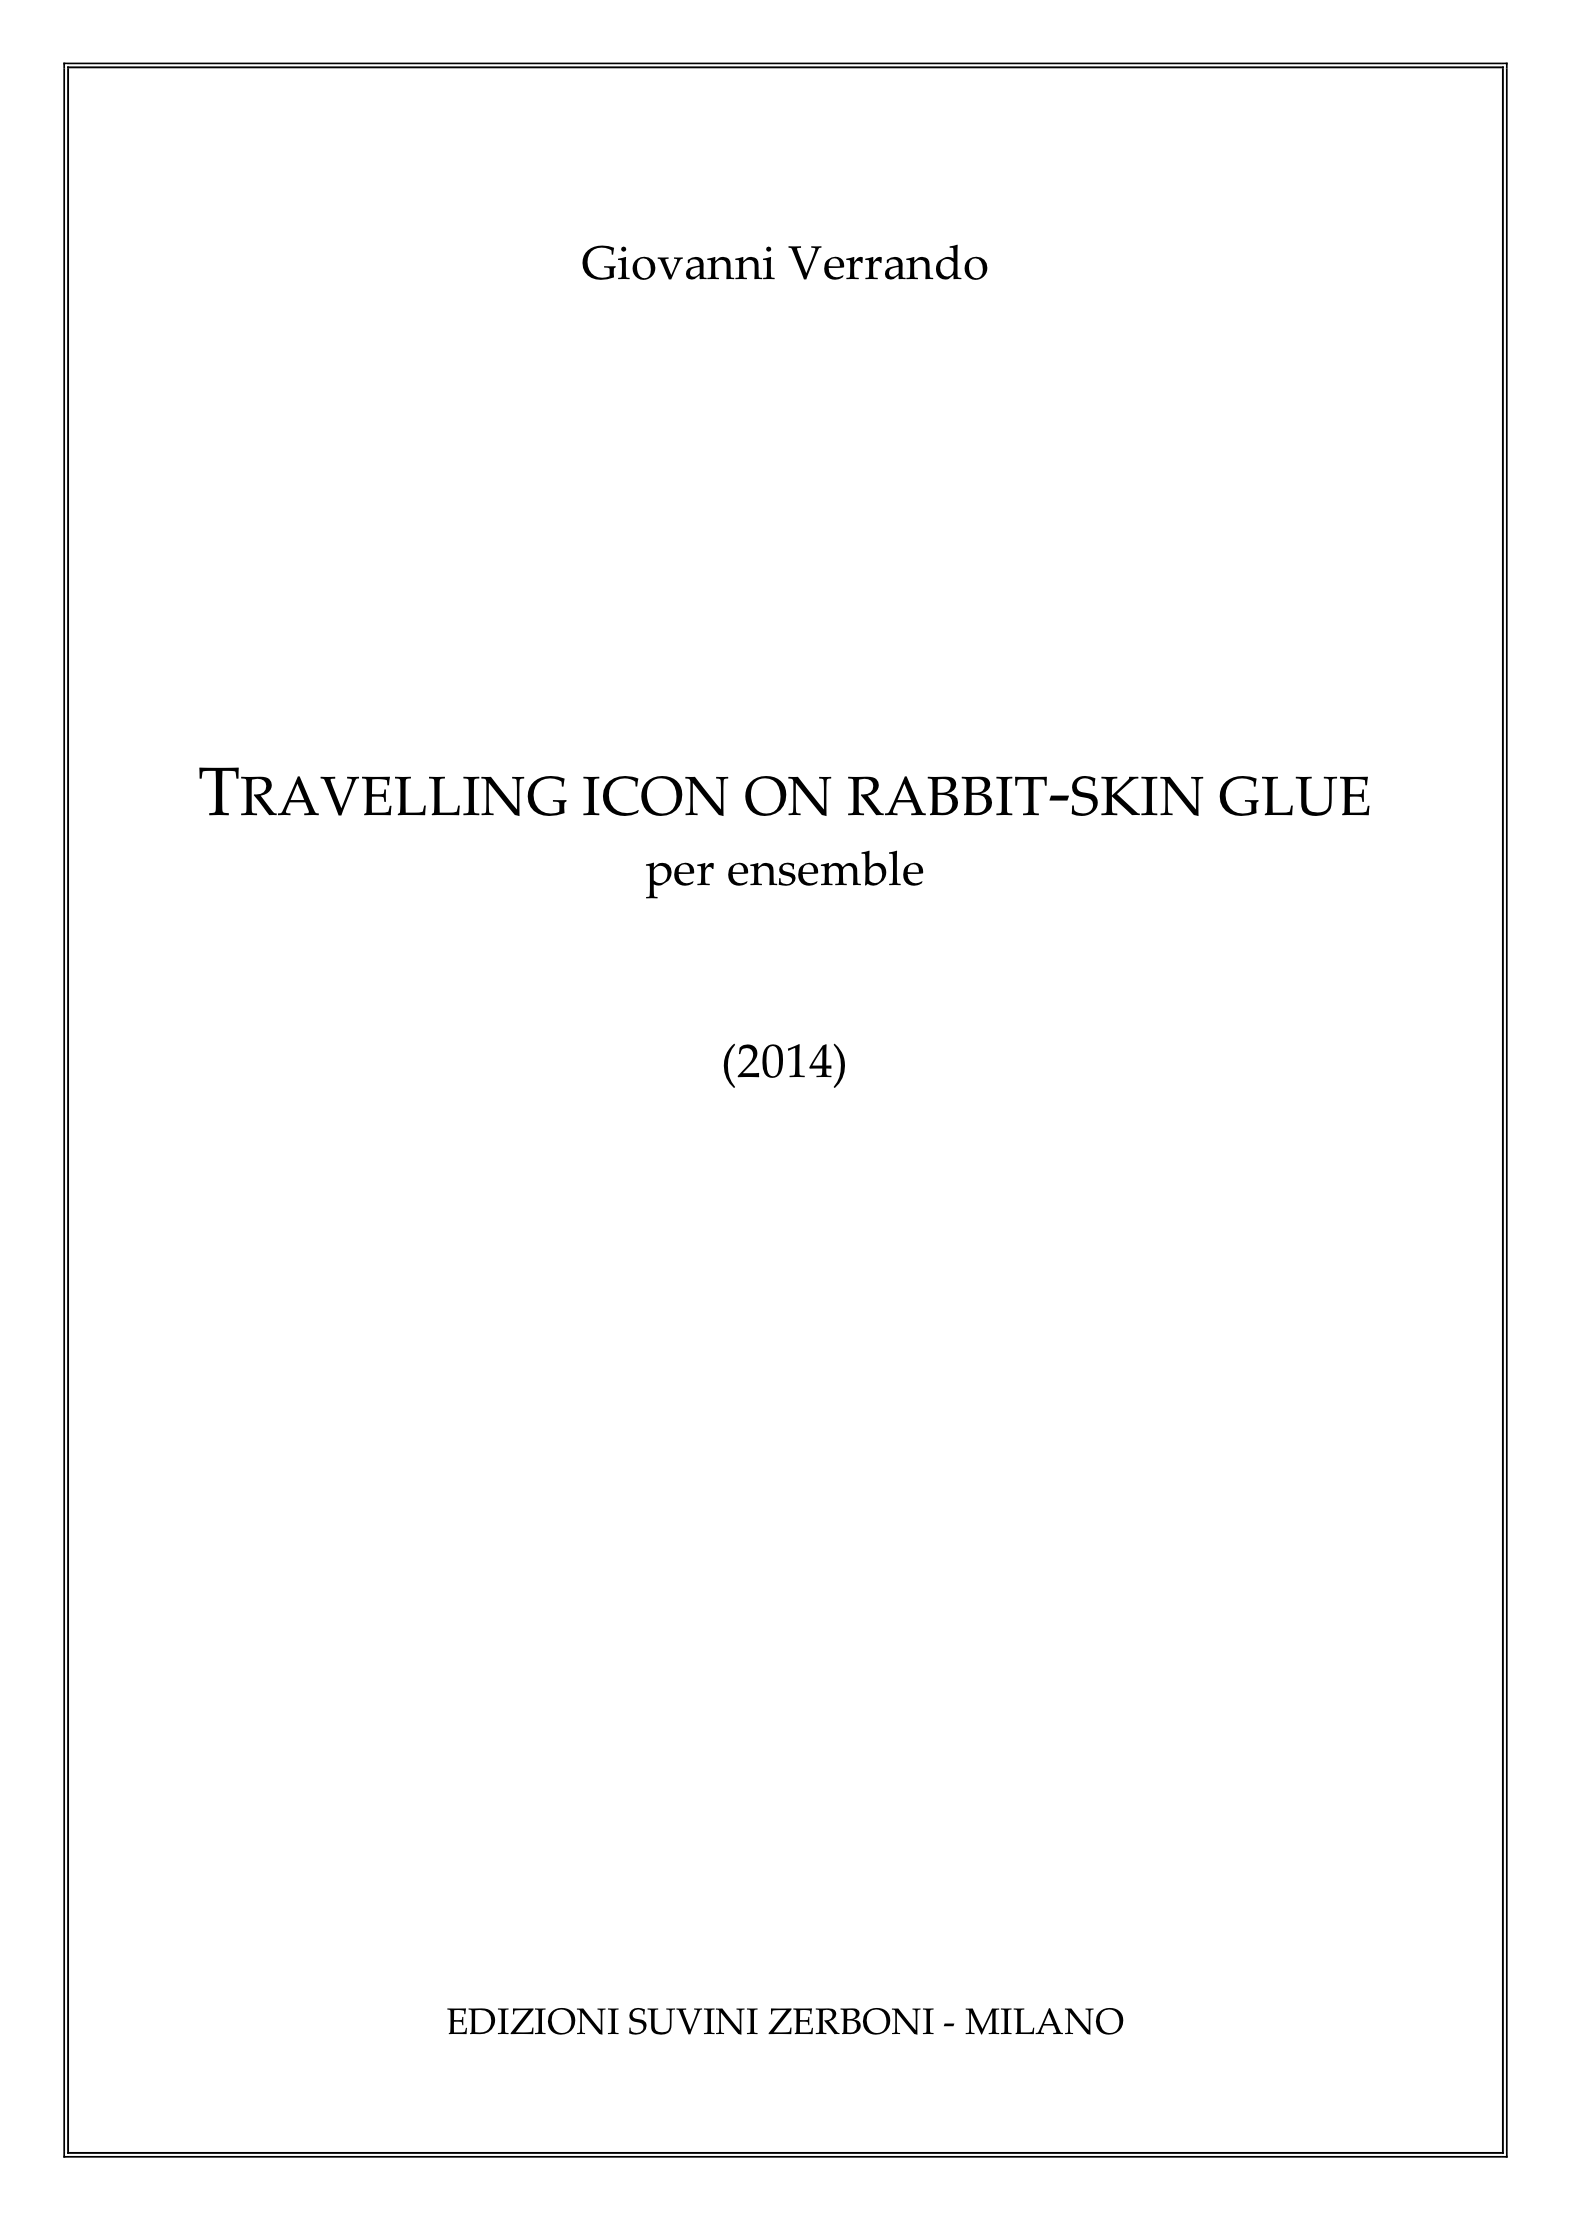 Travelling icon on rabbit skin glue_Verrando 1